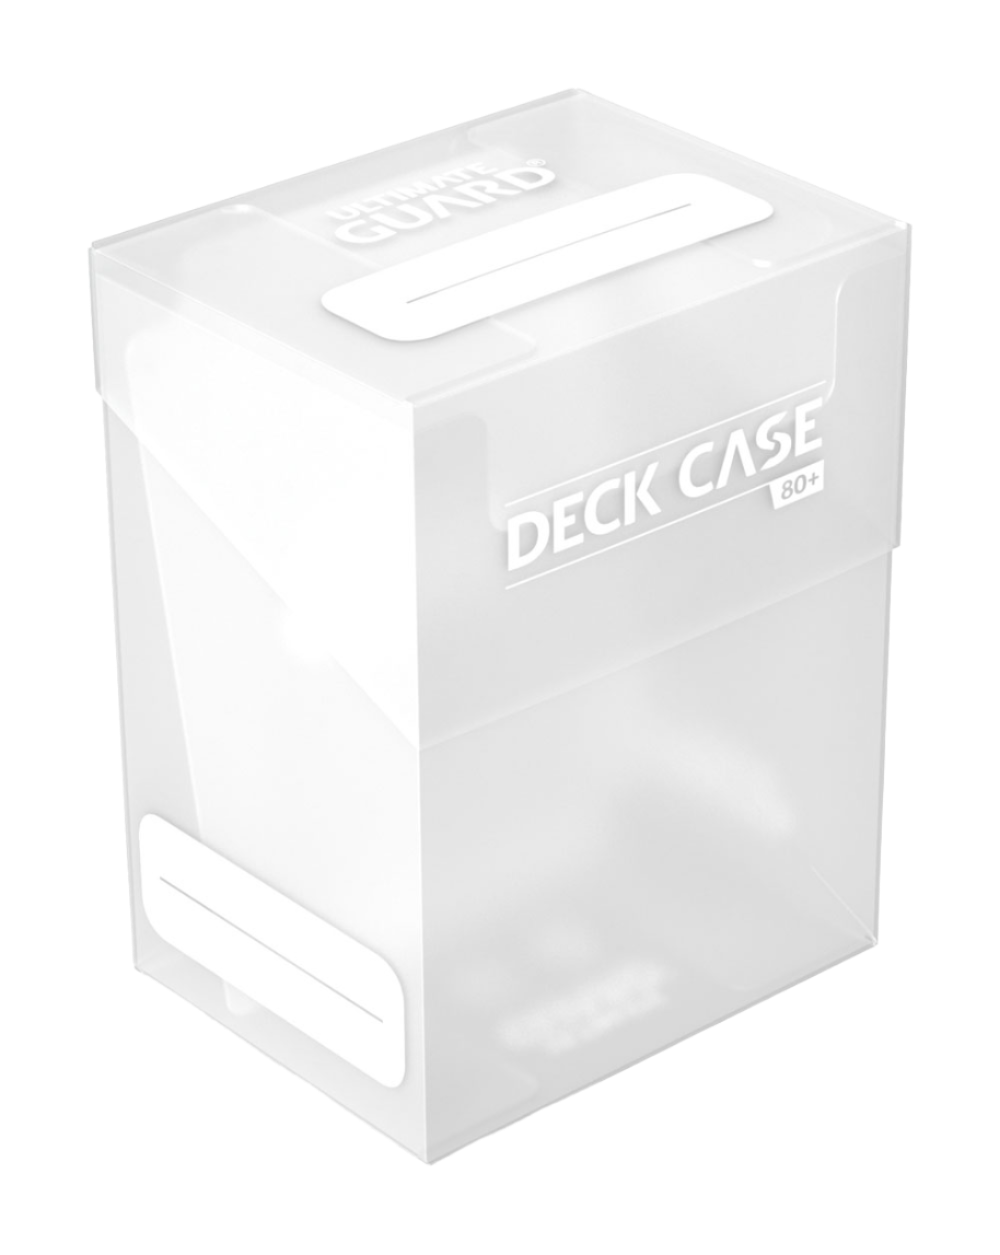 Ultimate Guard - 80+ Deck Case - Transparent